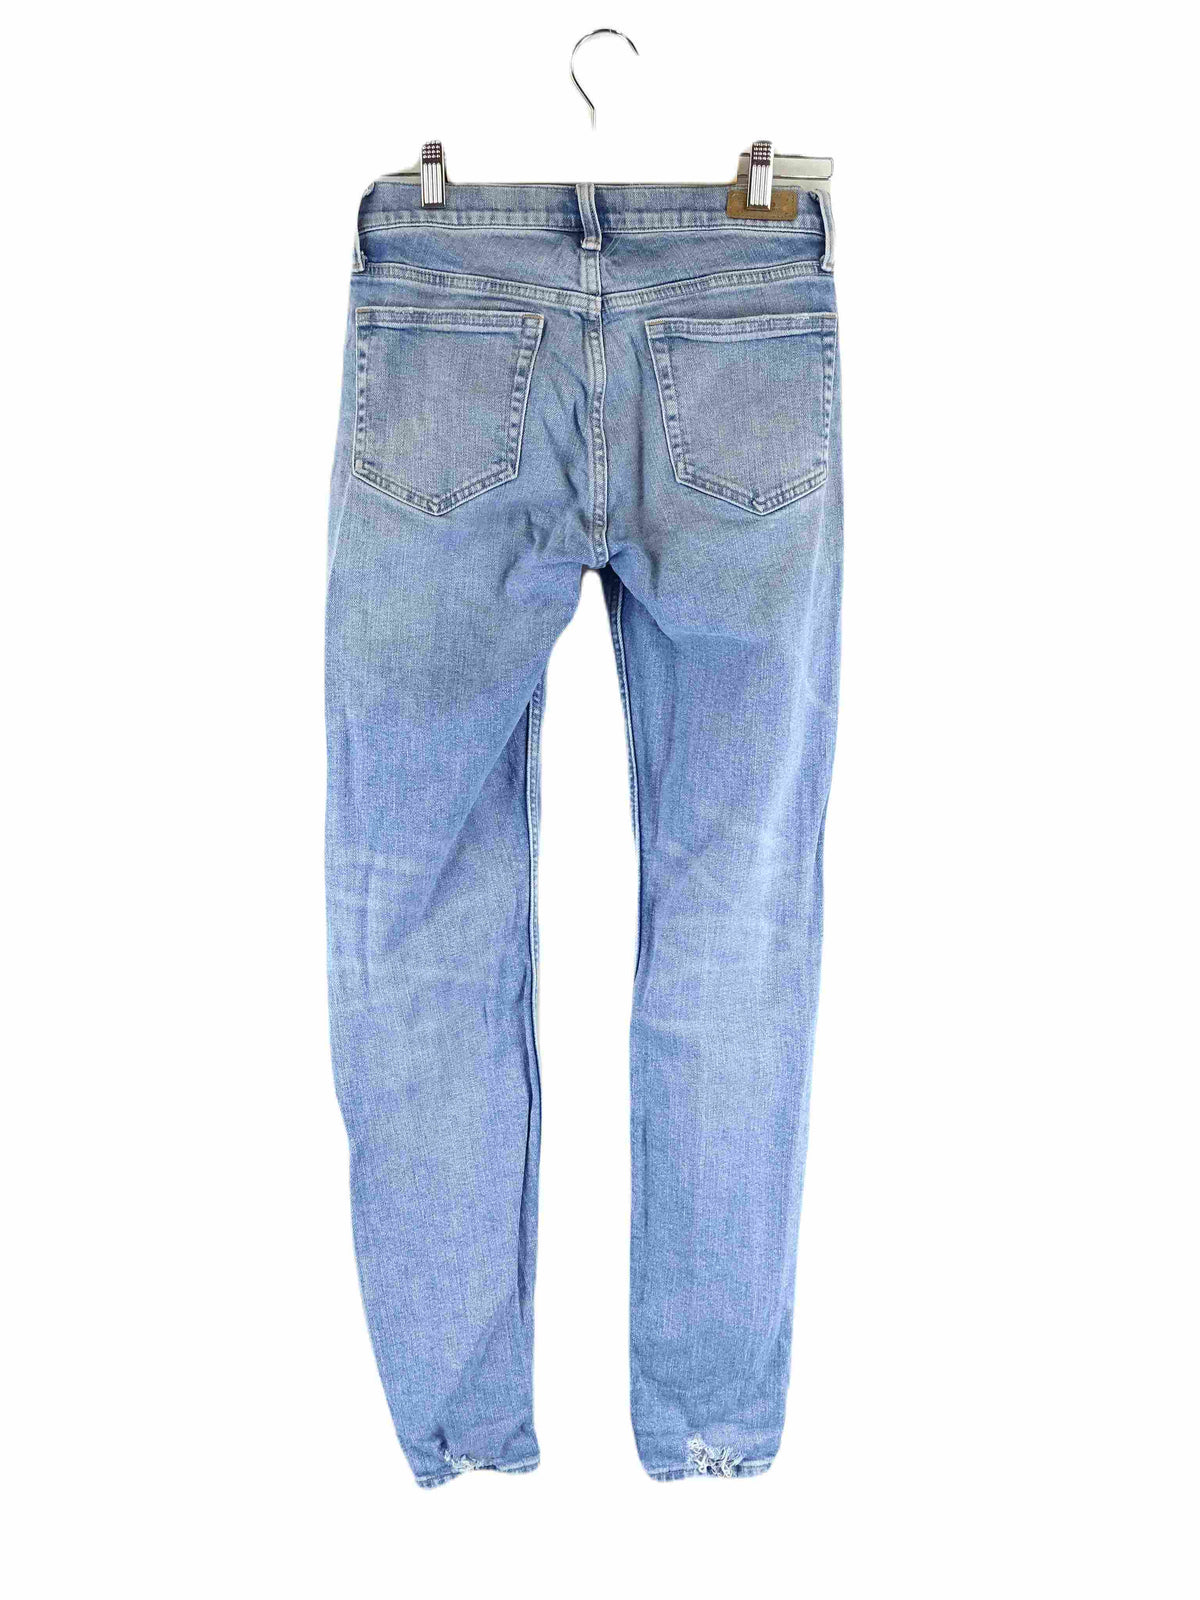 Ralph Lauren Polo Blue Mid Rise Skinny Jeans 26